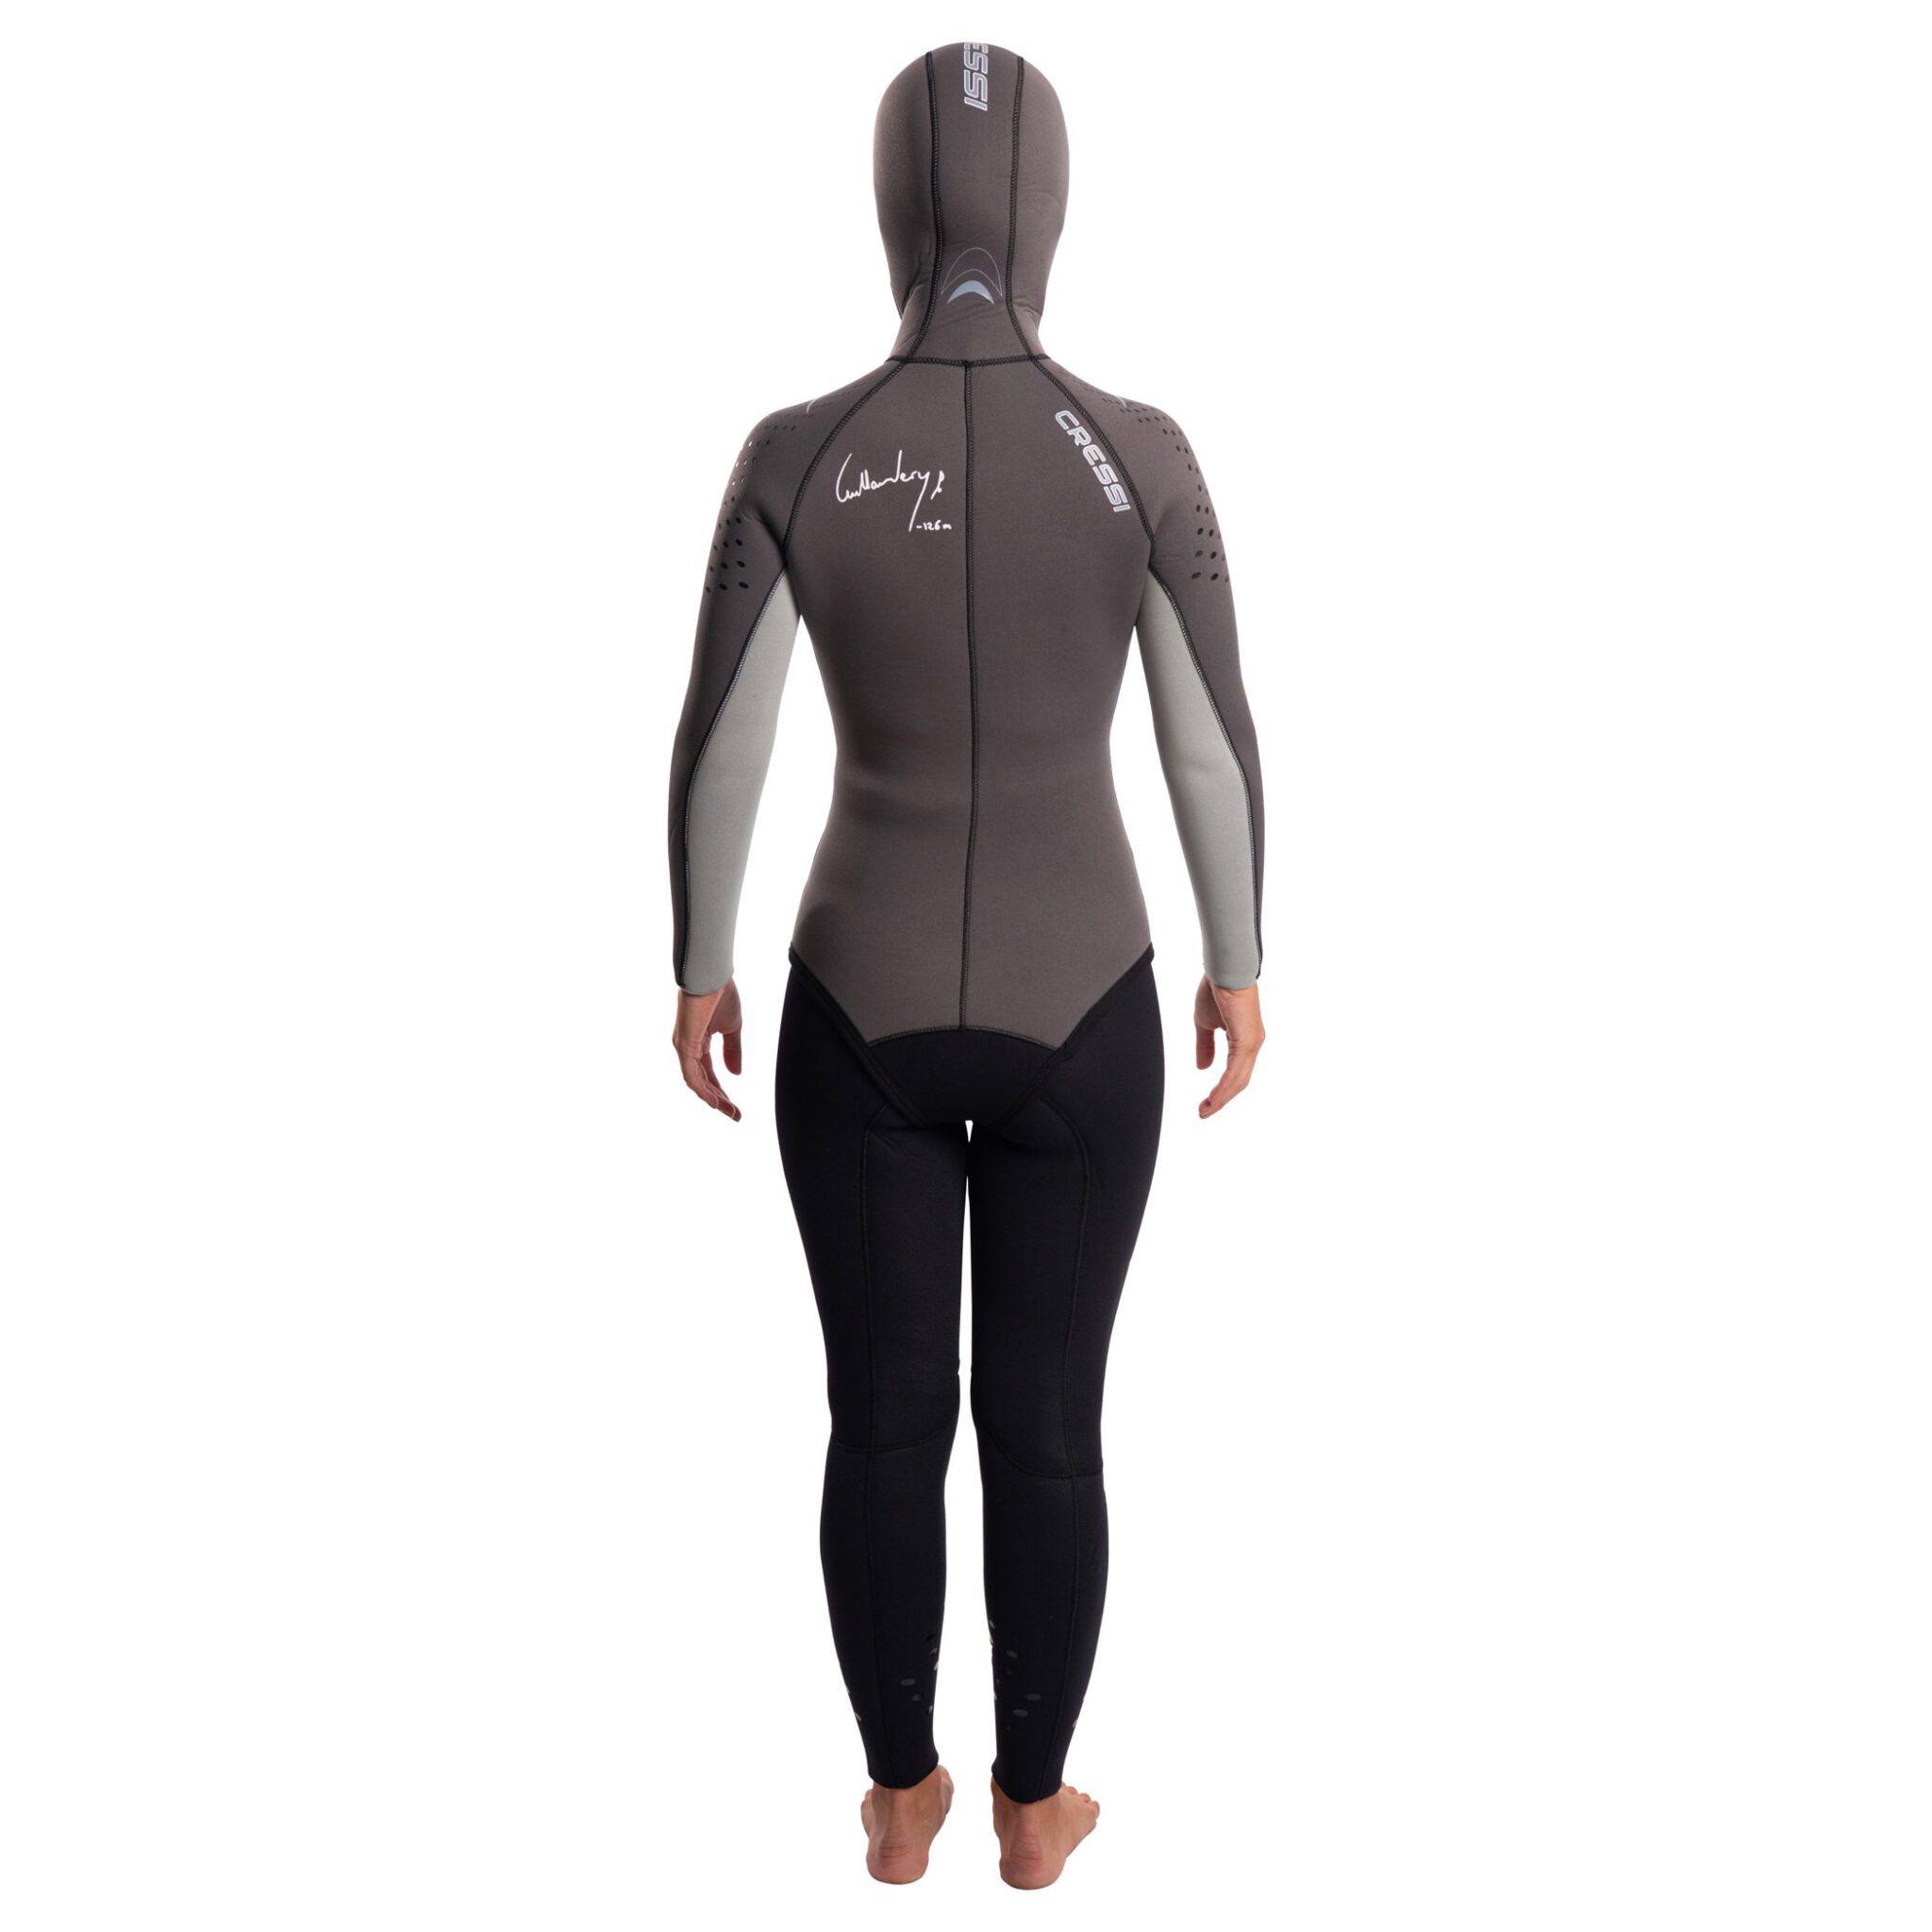 https://divegearaustralia.com.au/wp-content/uploads/2020/06/Cressi-Free-Lady-5mm-Freediving-Wetsuit-scaled.jpg